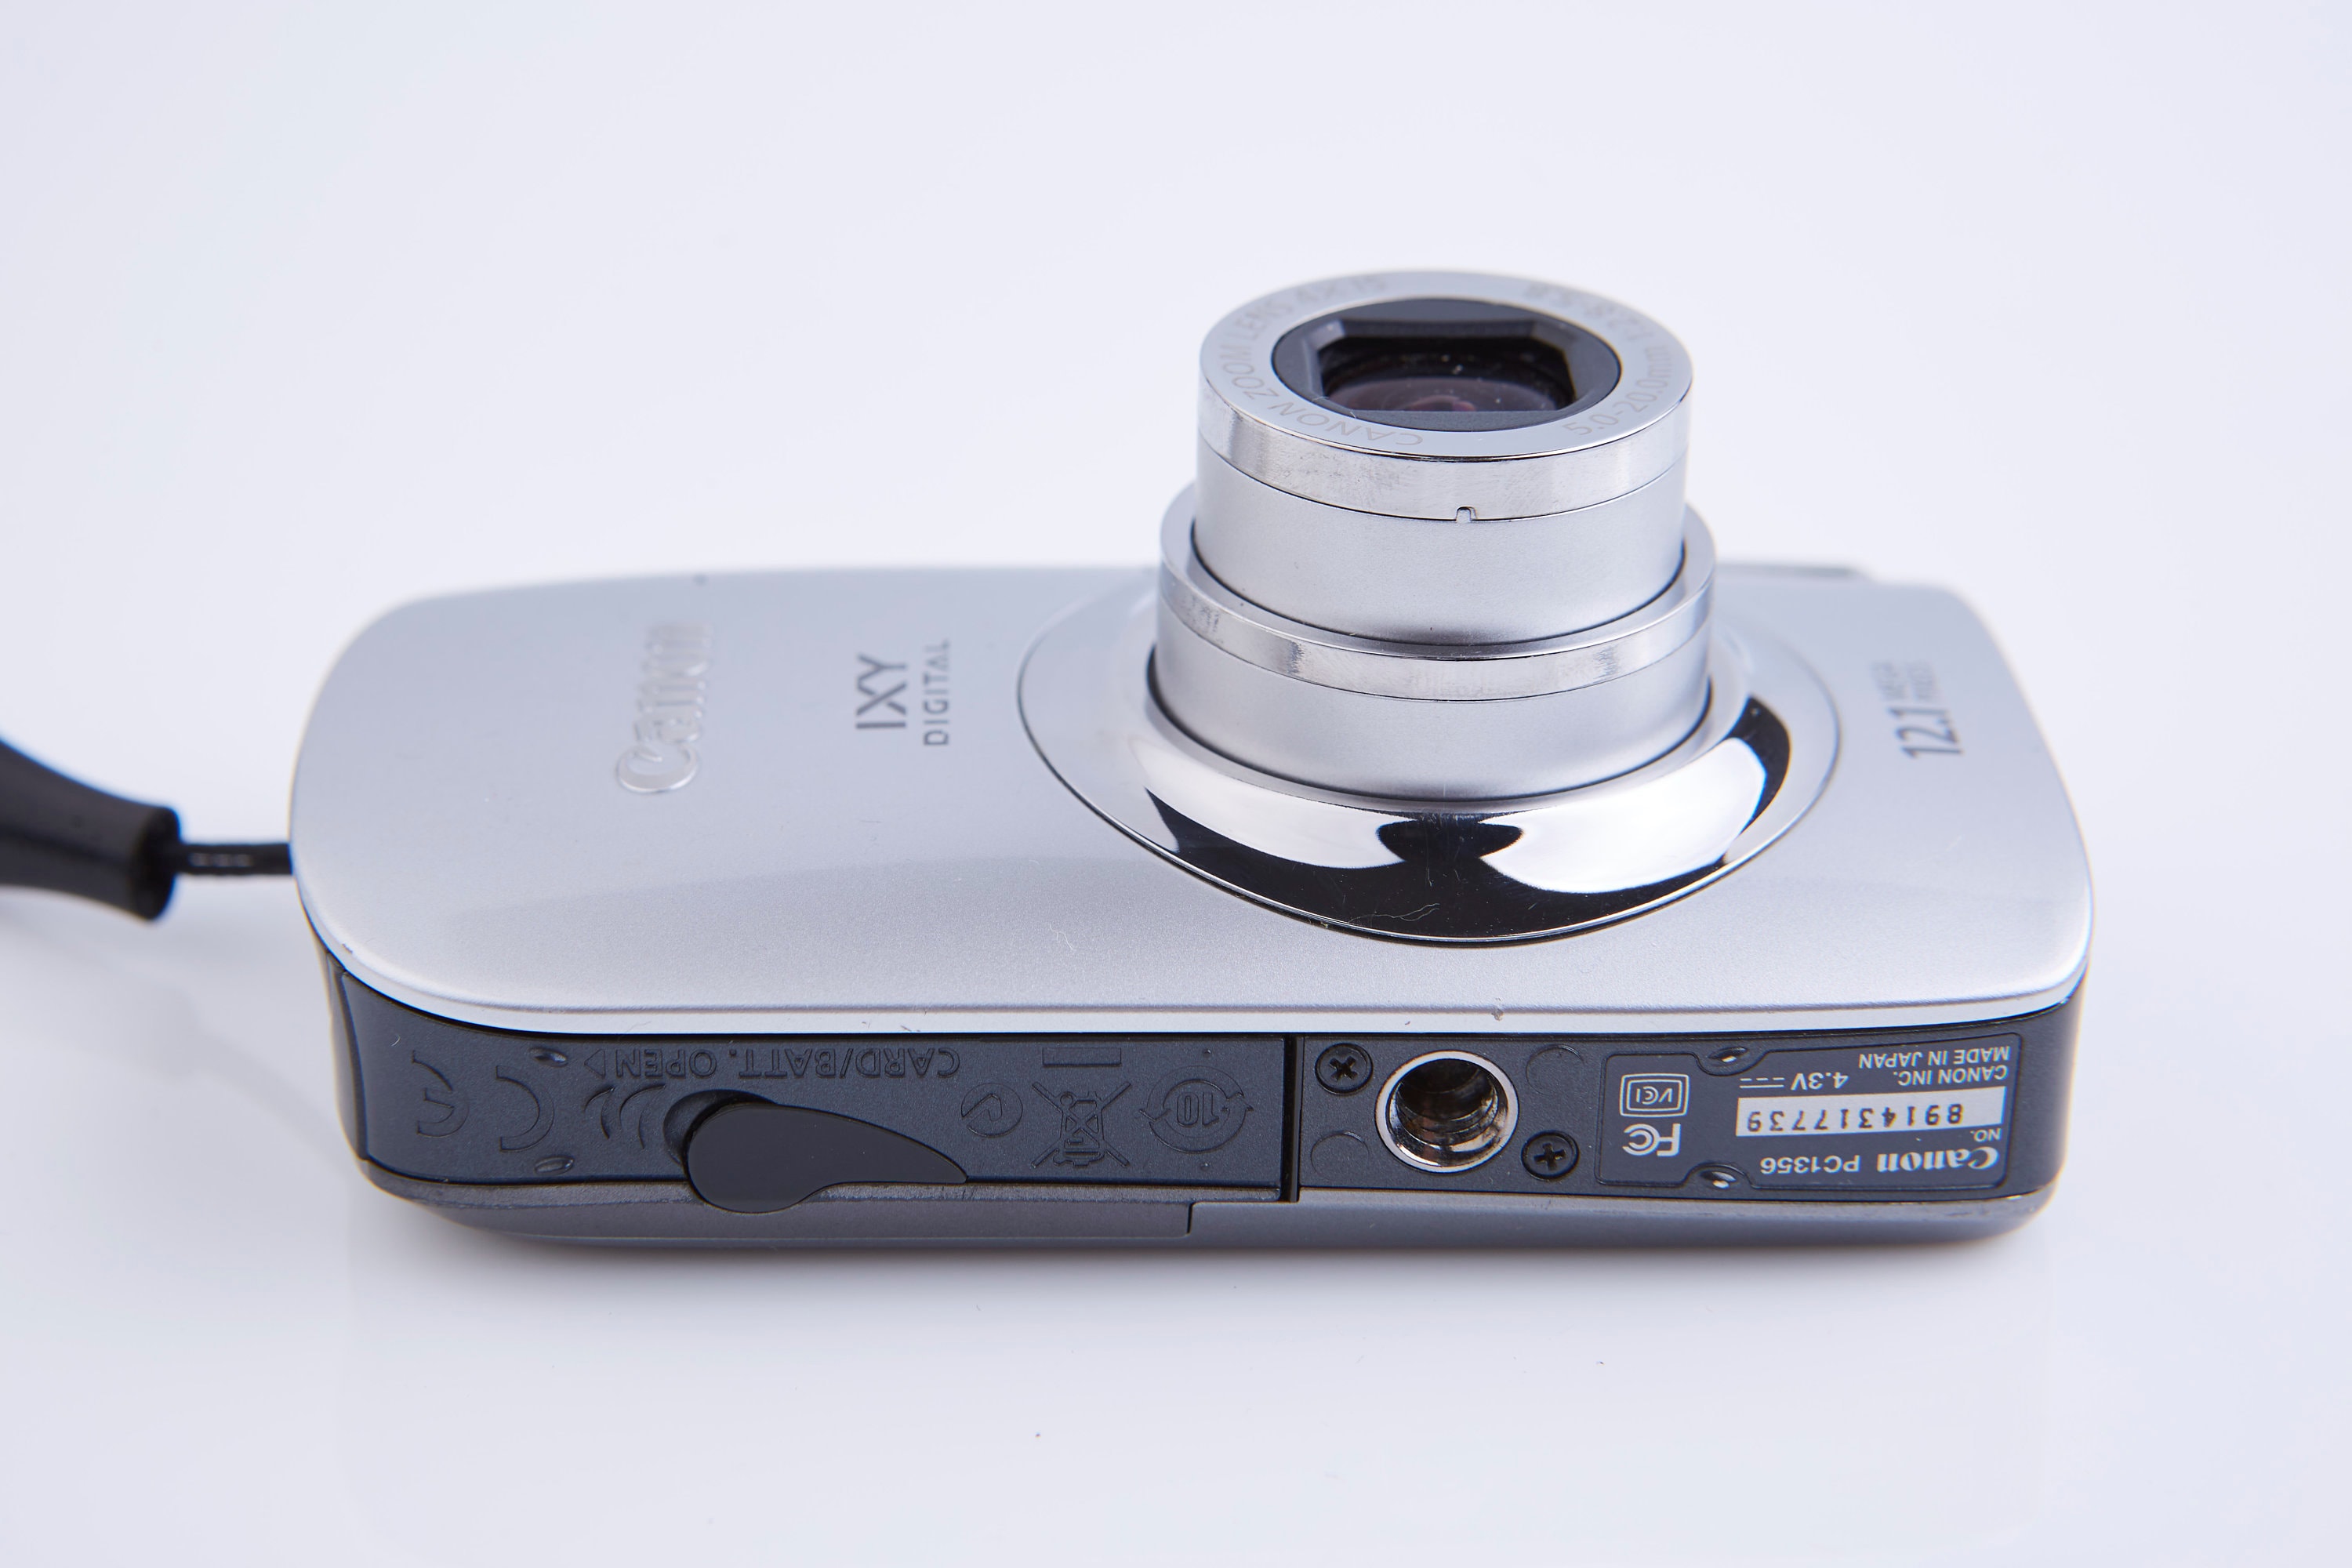 Canon IXY DIGITAL 510 IS 12MP 4x Zoom Compact Digital Camera